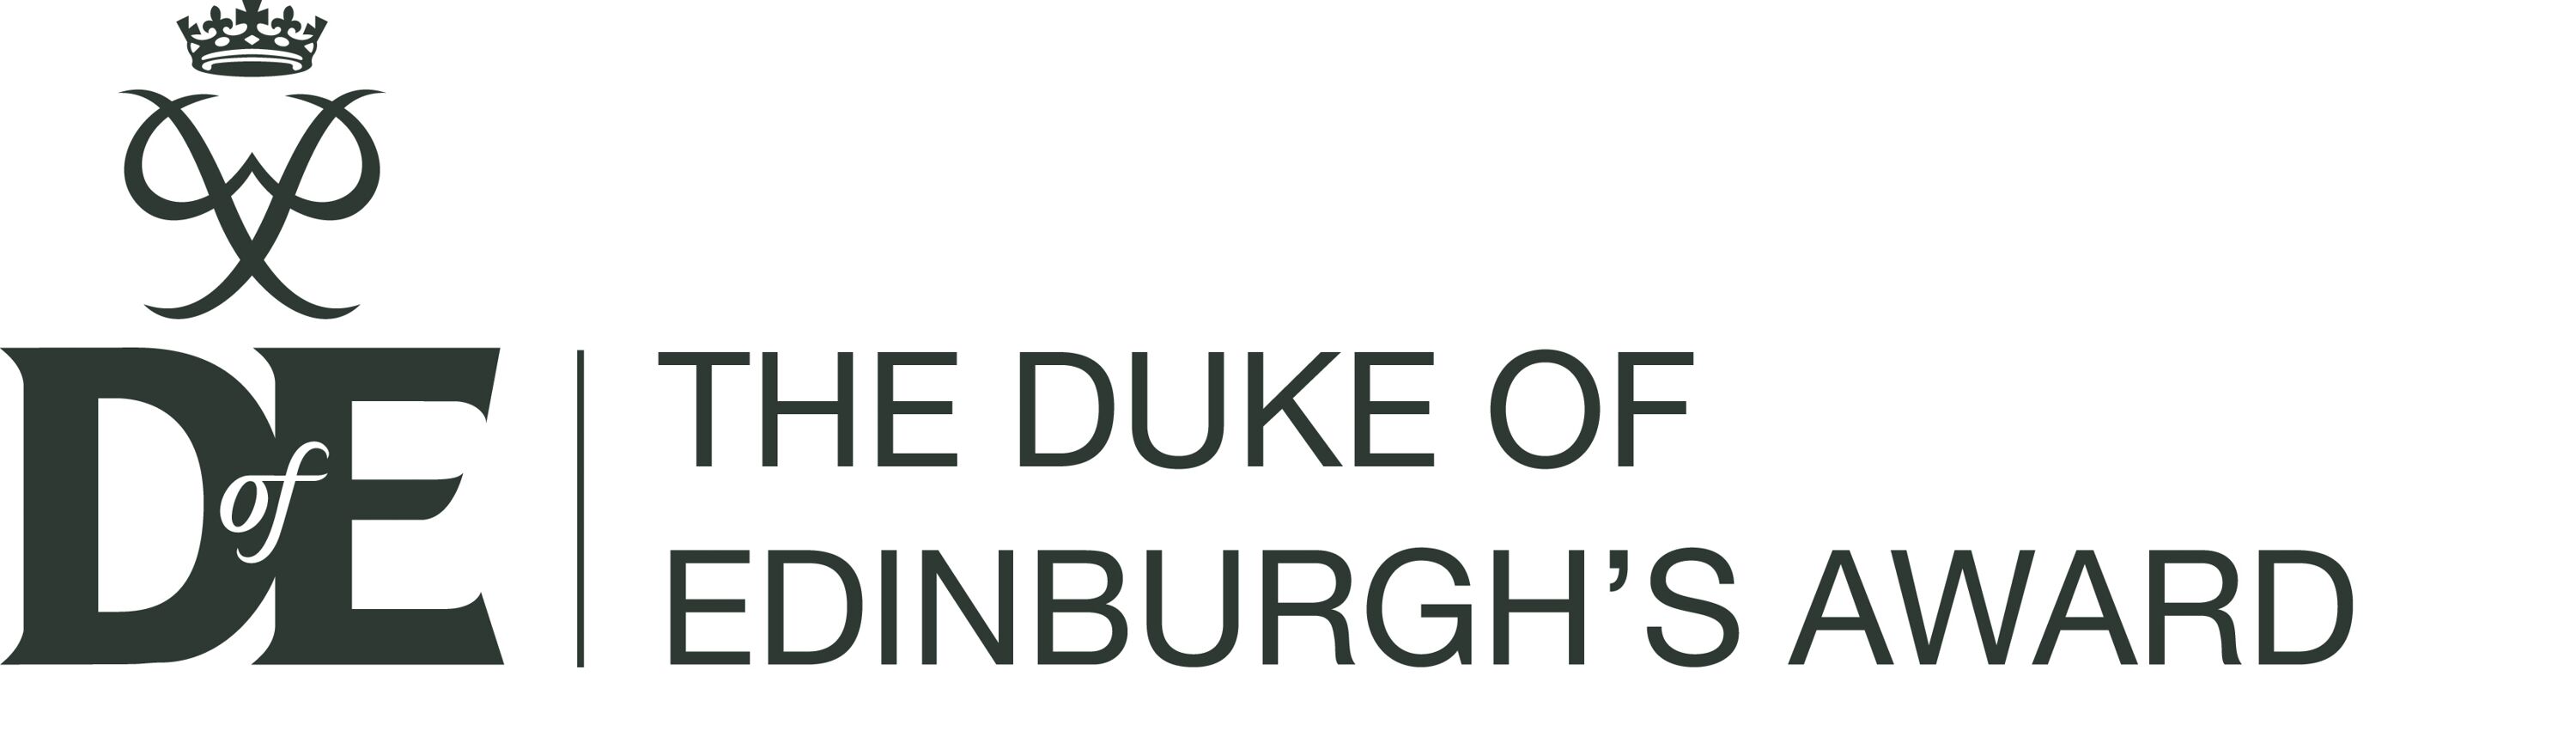 Duke of e2